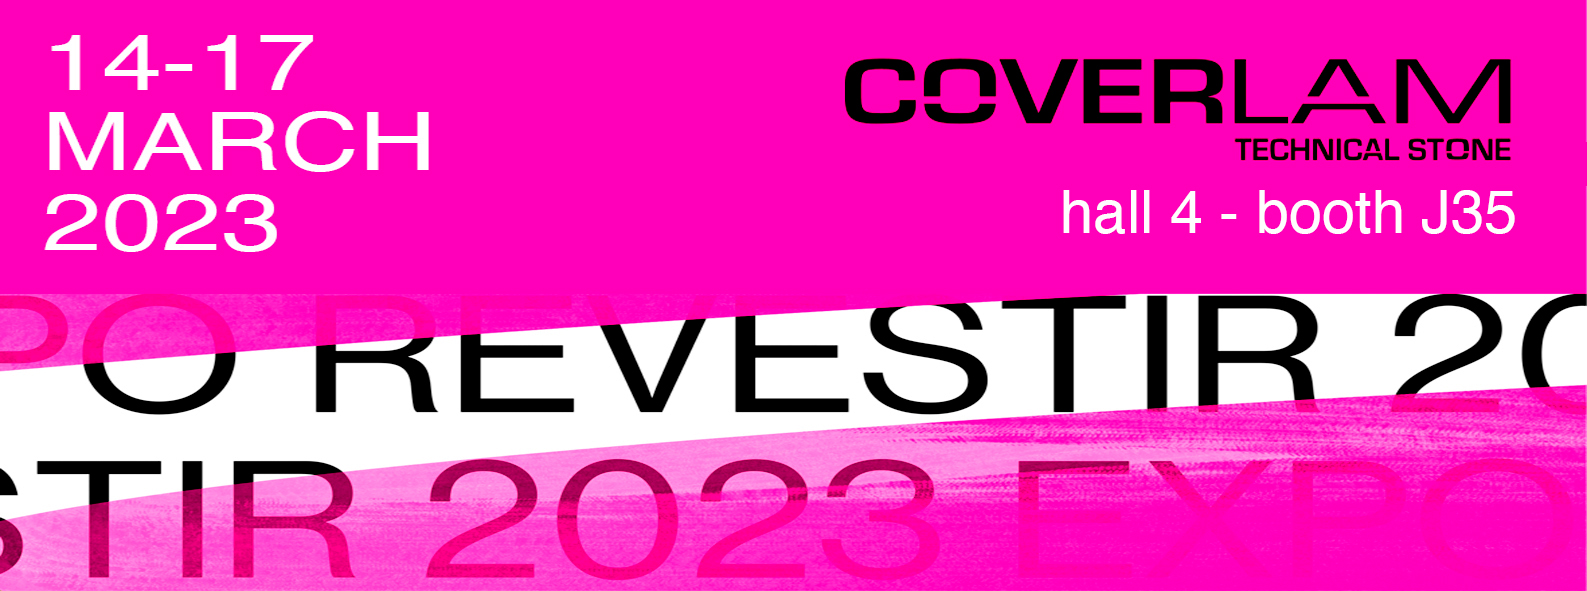 COVERLAM AT EXPO REVESTIR 2023